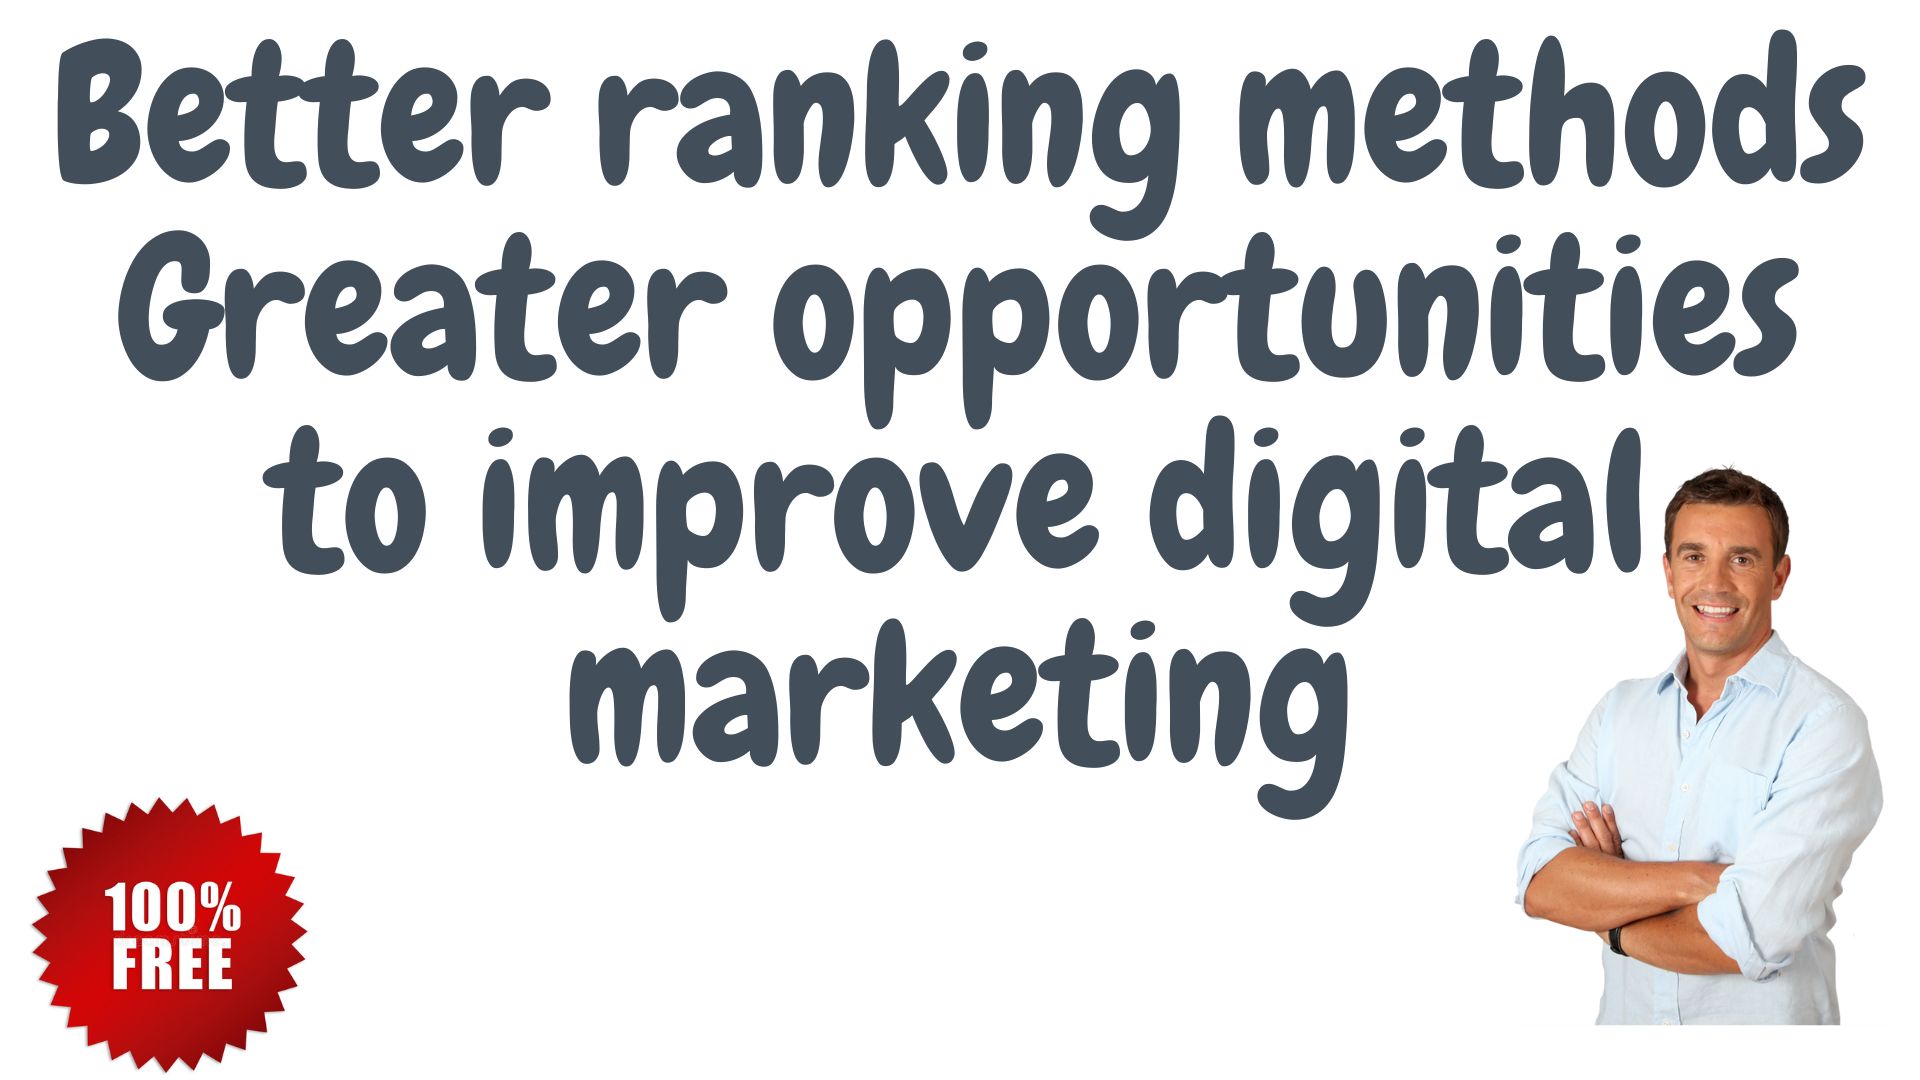 Better ranking methods greater opportunities to improve digital marketing